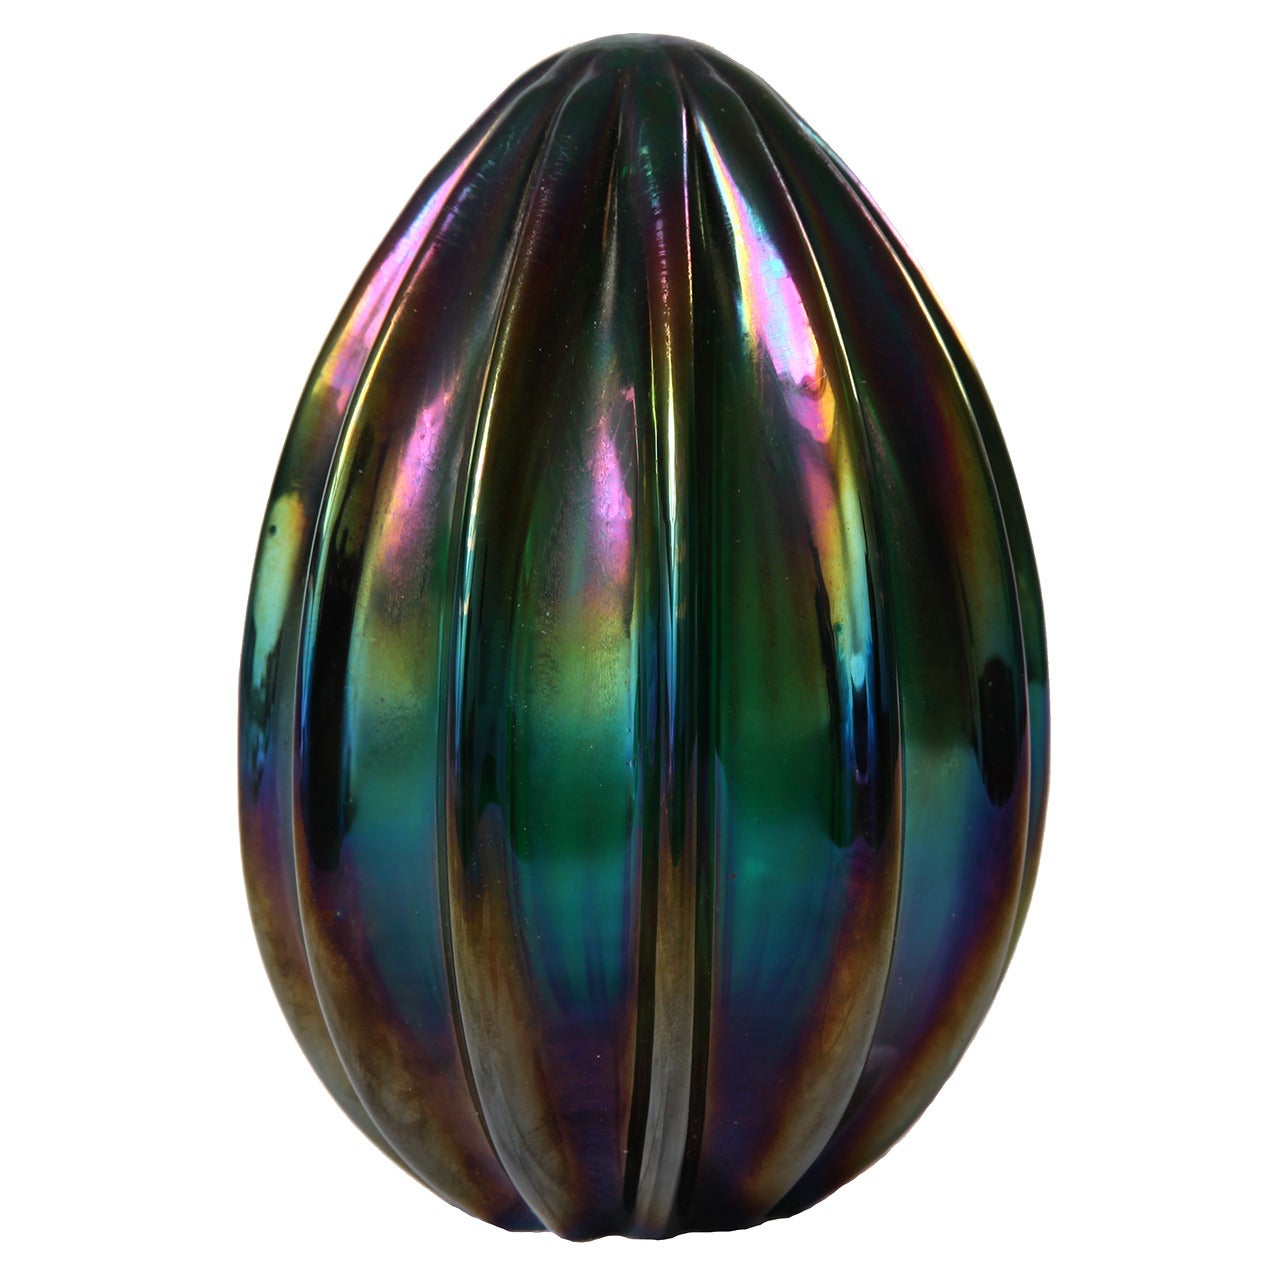 Archimede Seguso Glass Egg, 1996